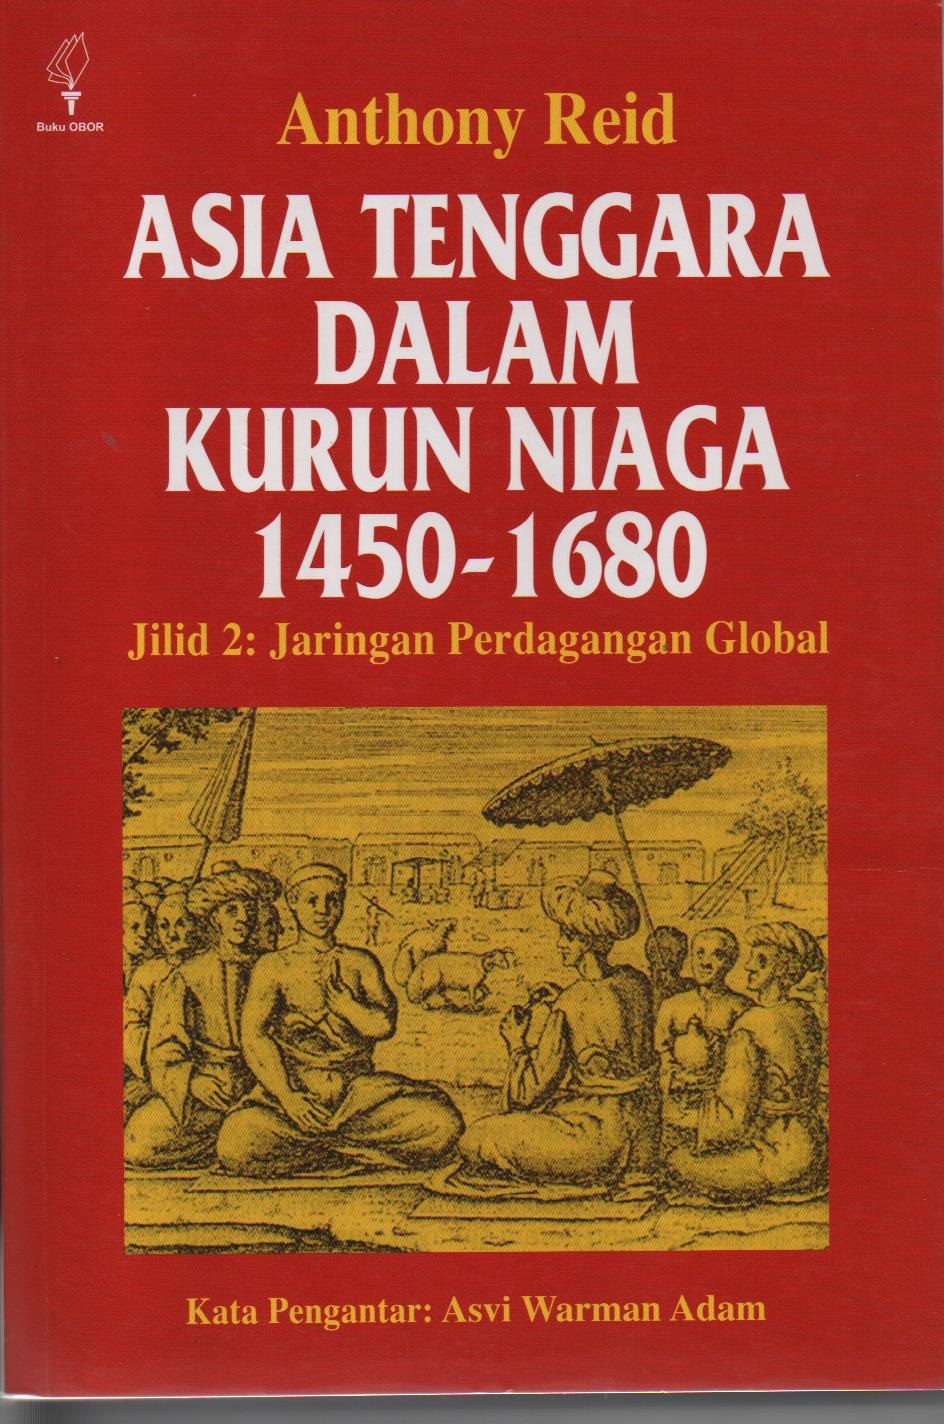 Asia Tenggara Dalam Kurun Niaga 1450 - 1680 : Jilid 2 : Jaringan Perdagangan Global